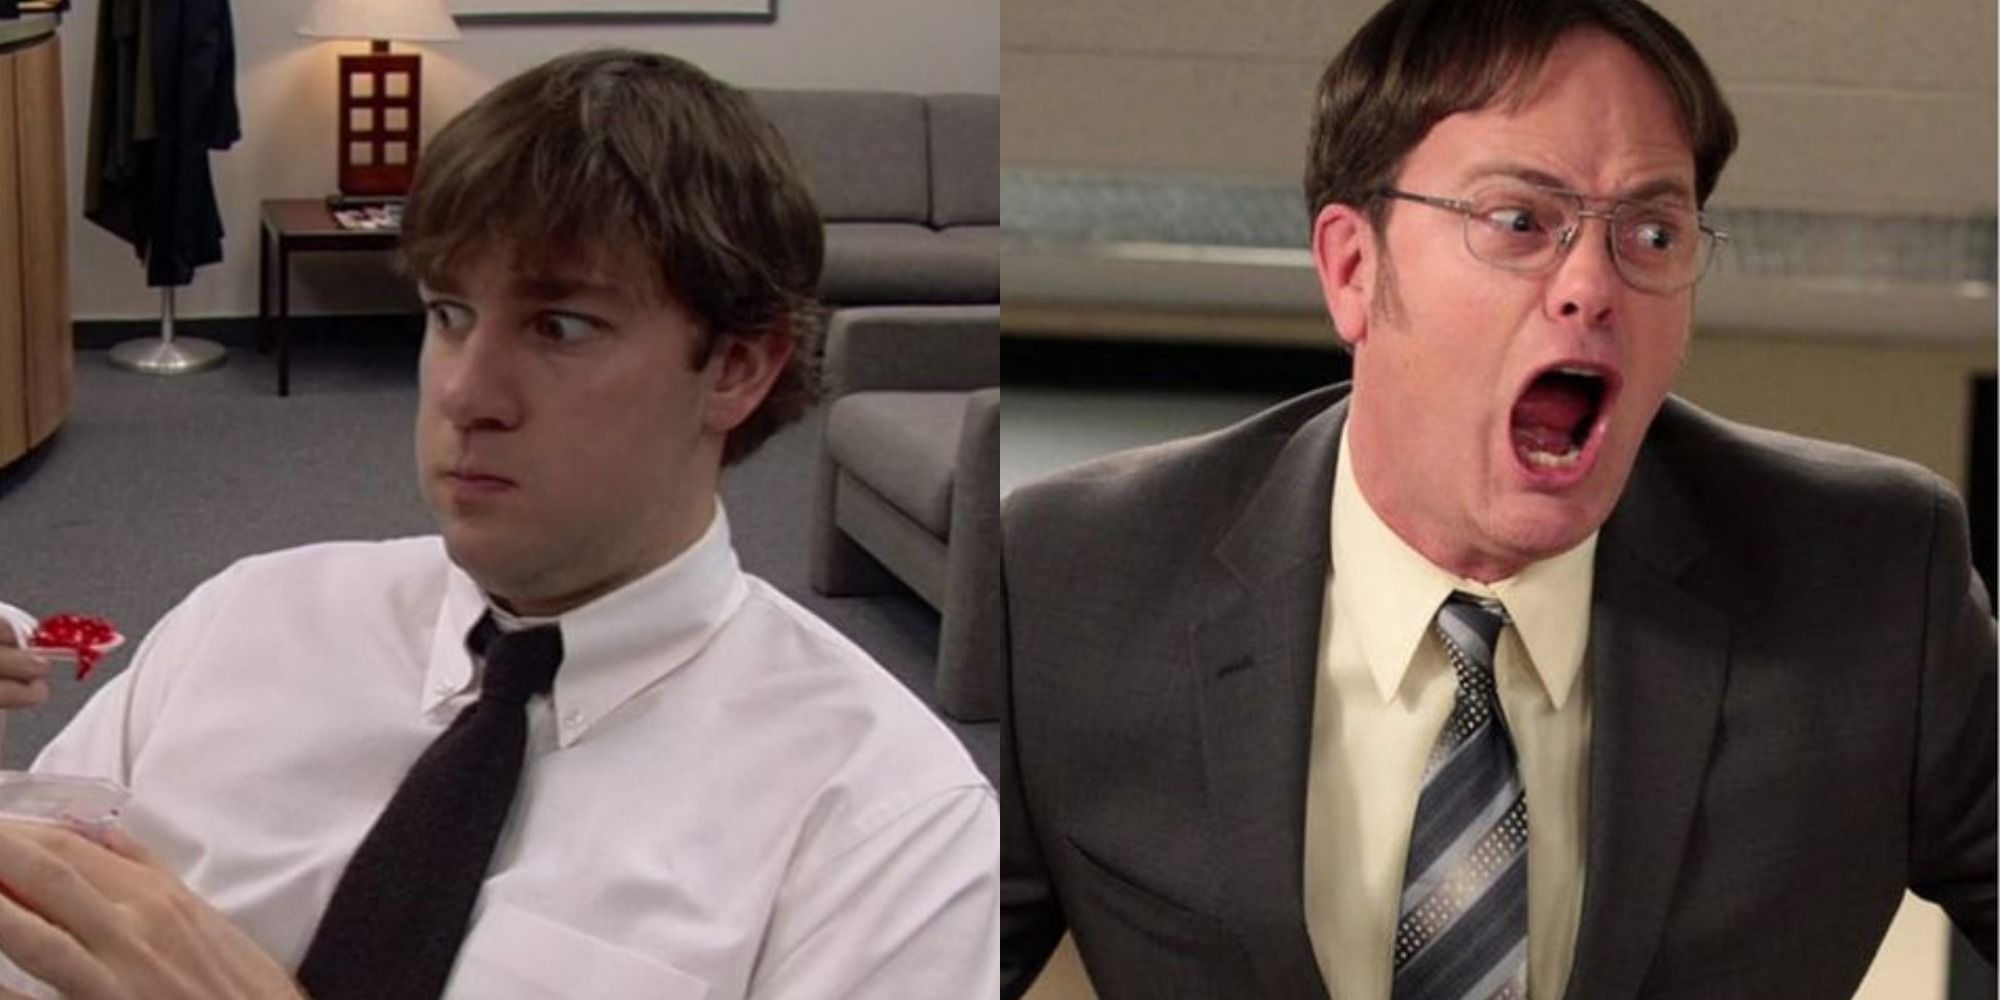 Jim sittings down/Dwight screams